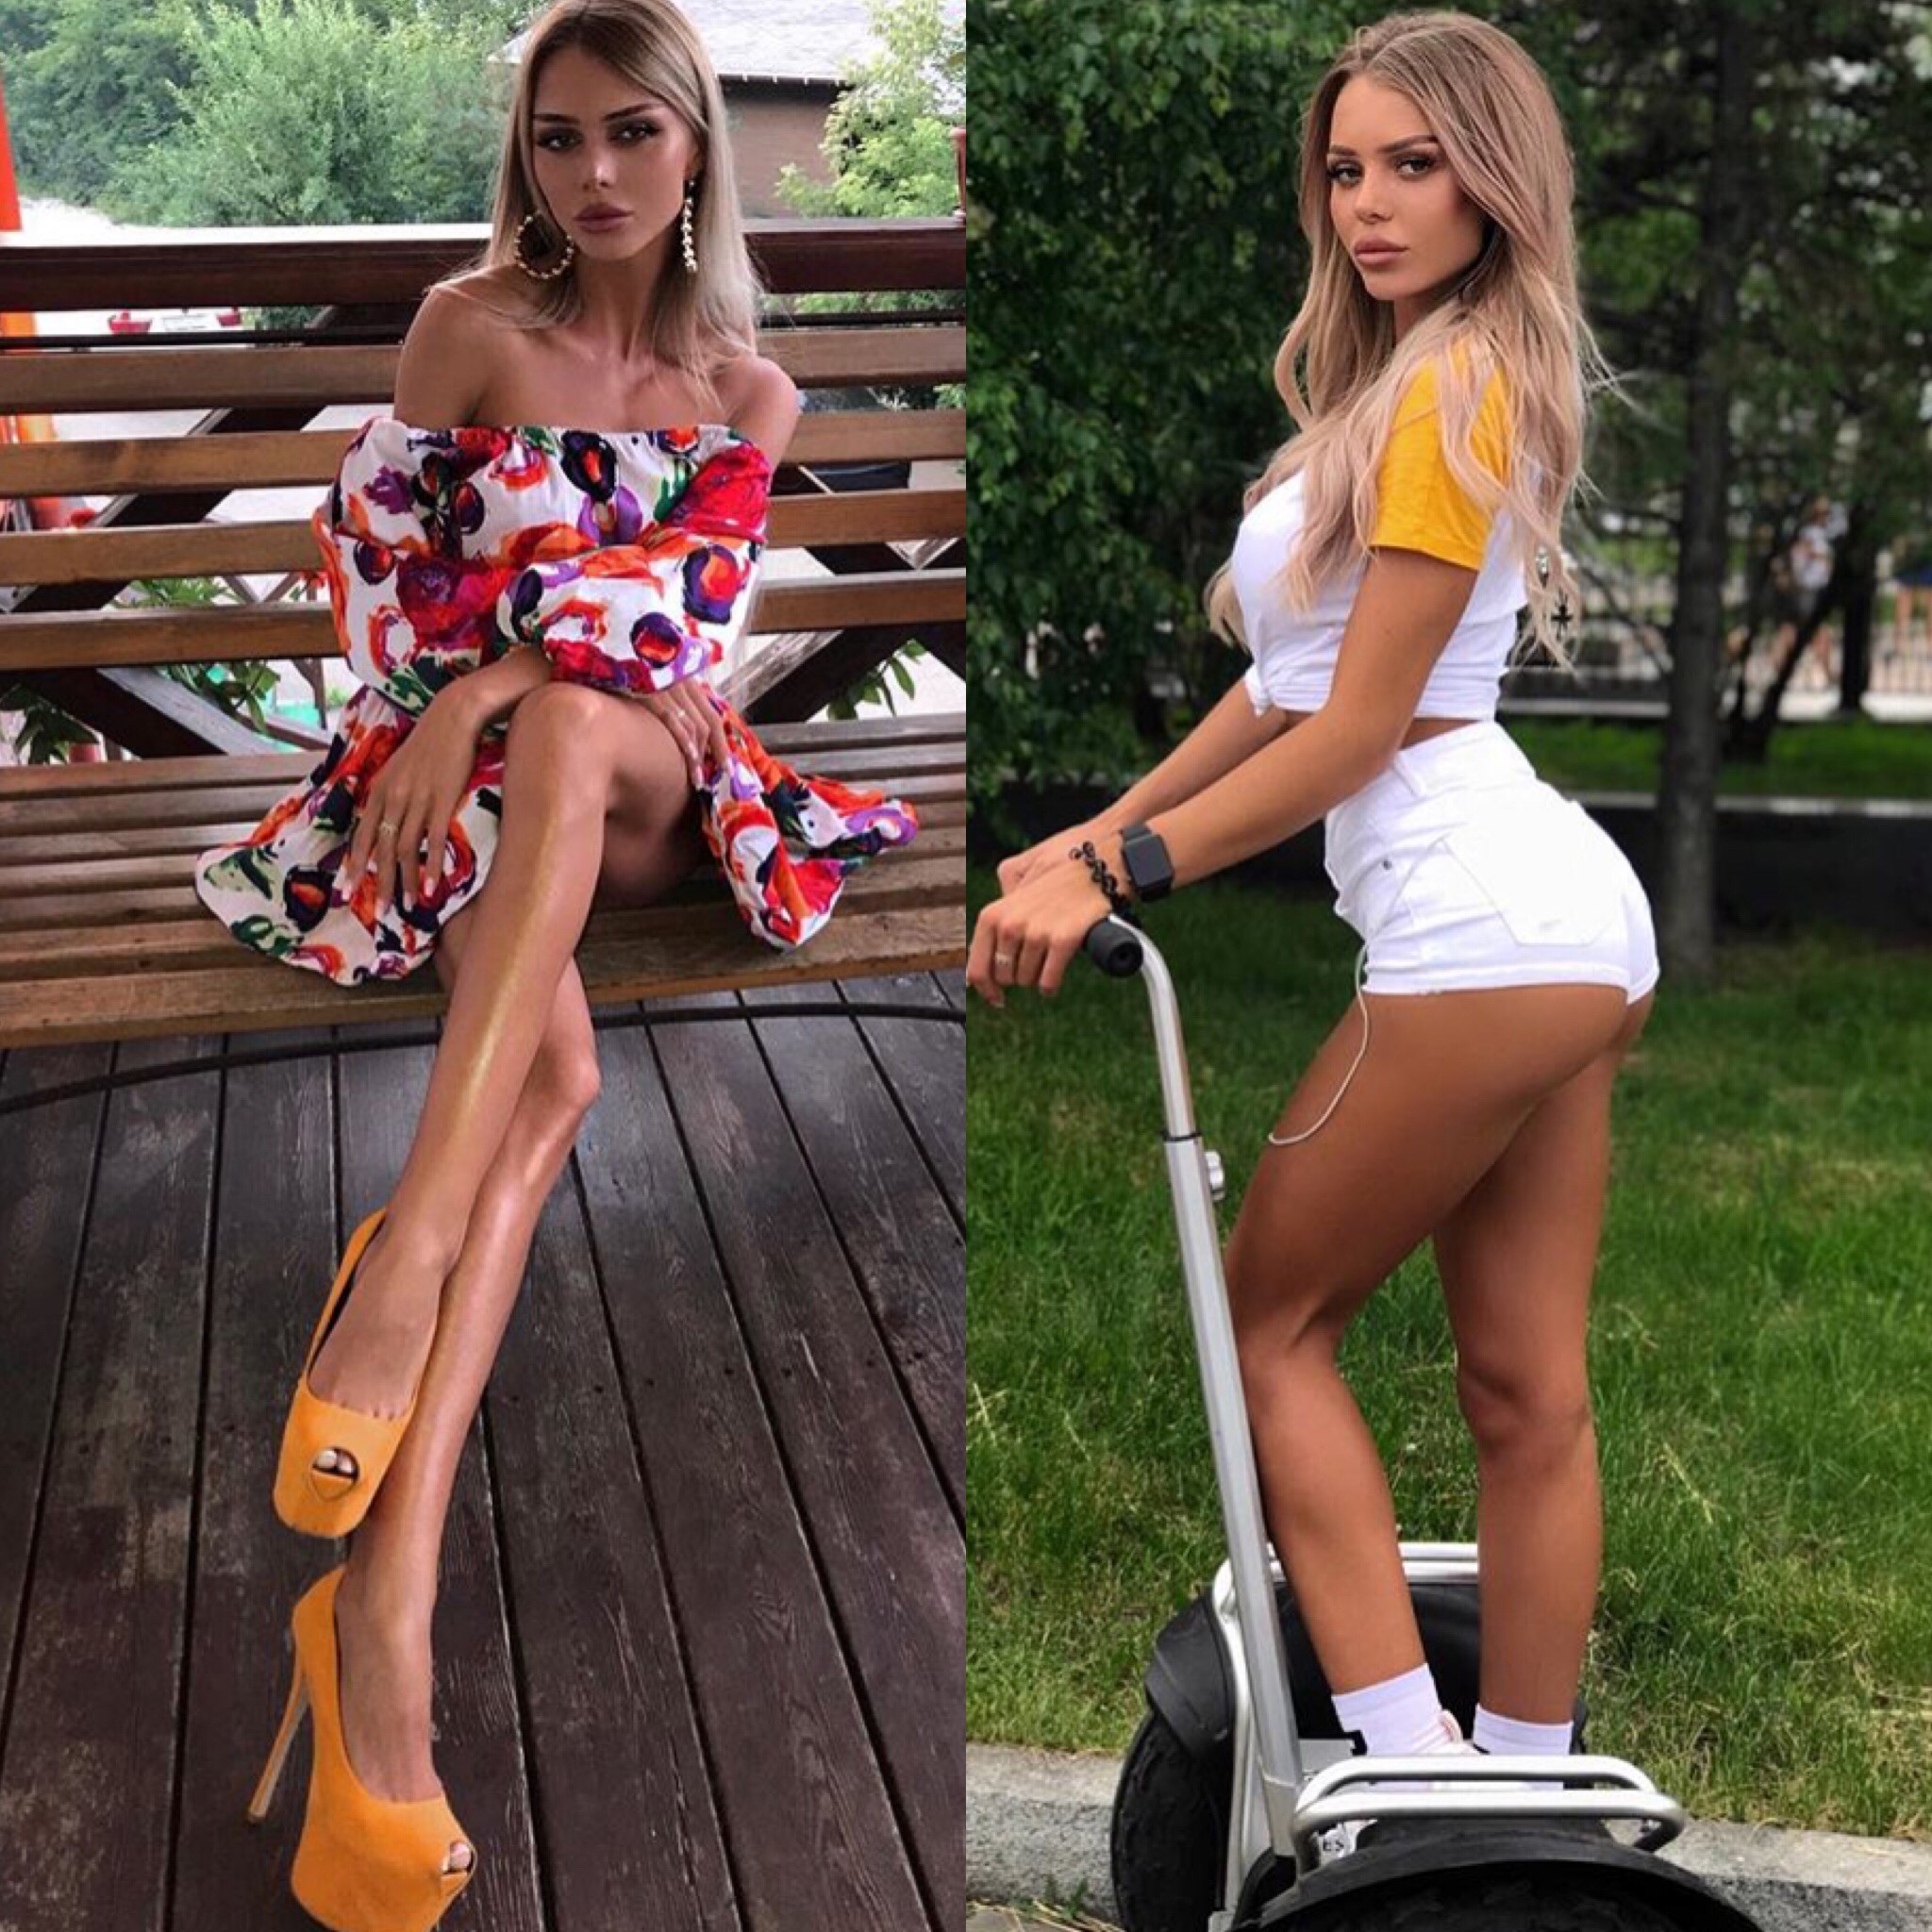 fake girls of Instagram - thigh